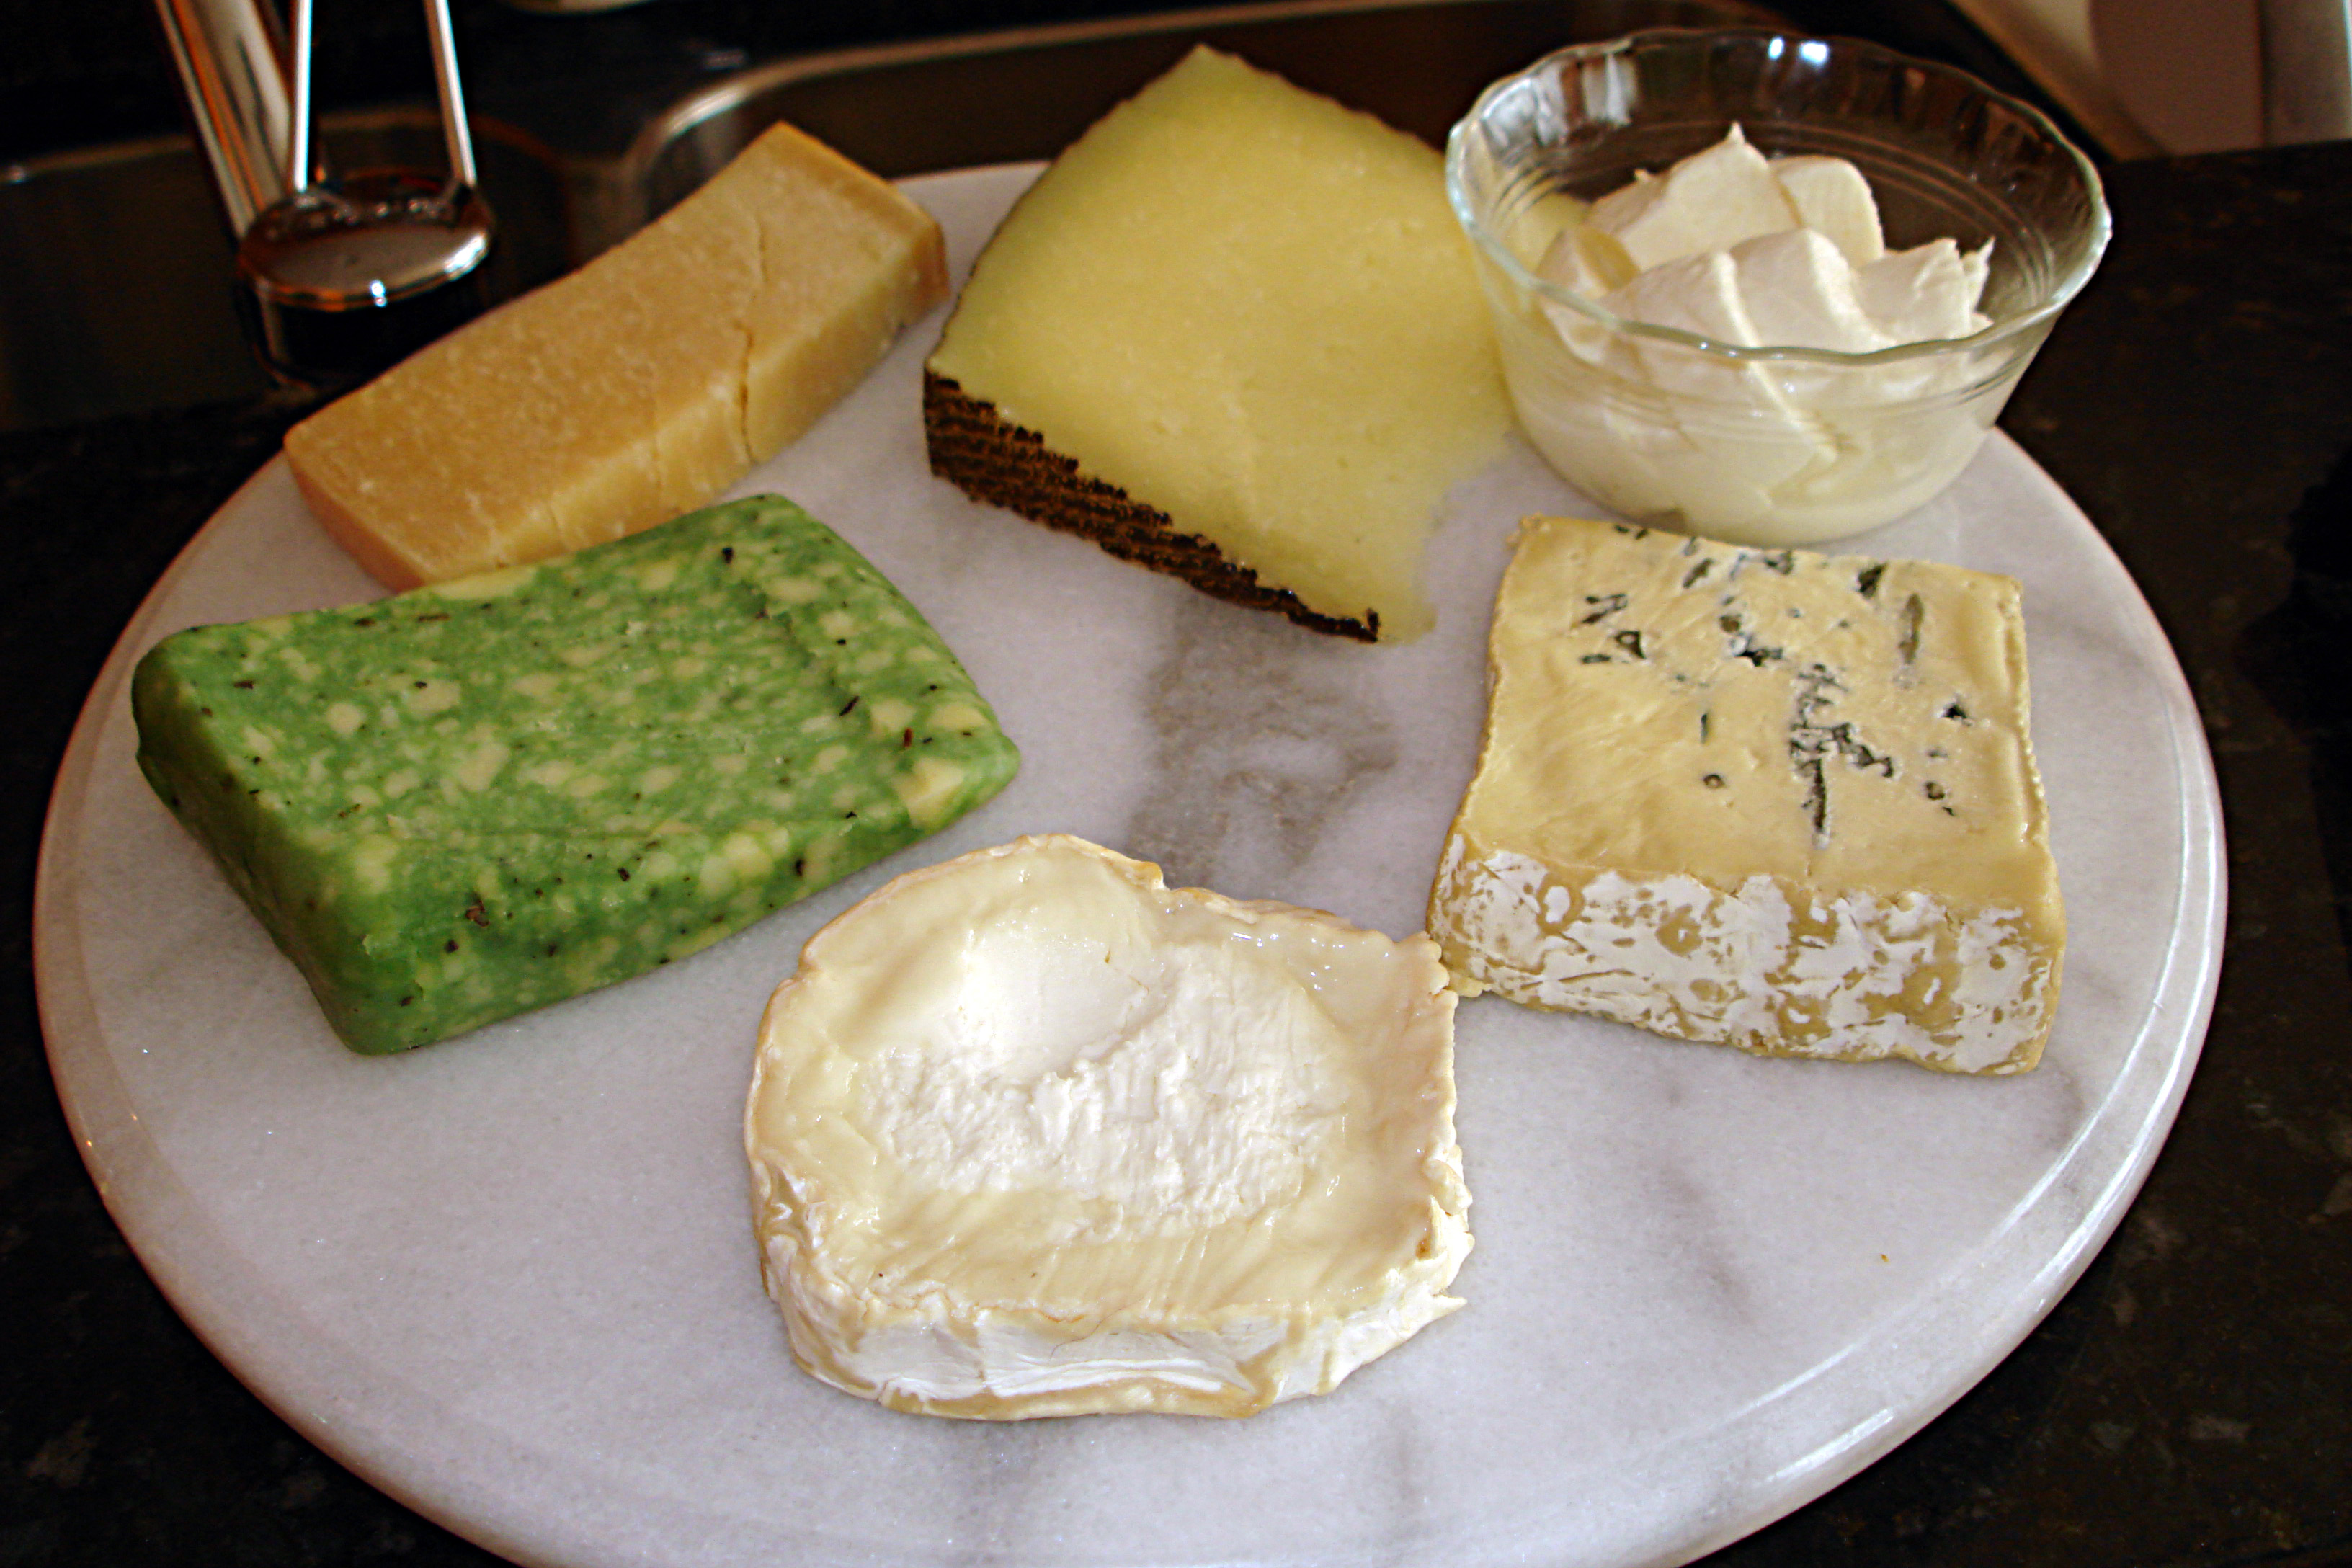 https://upload.wikimedia.org/wikipedia/commons/2/20/Various_cheeses.jpg